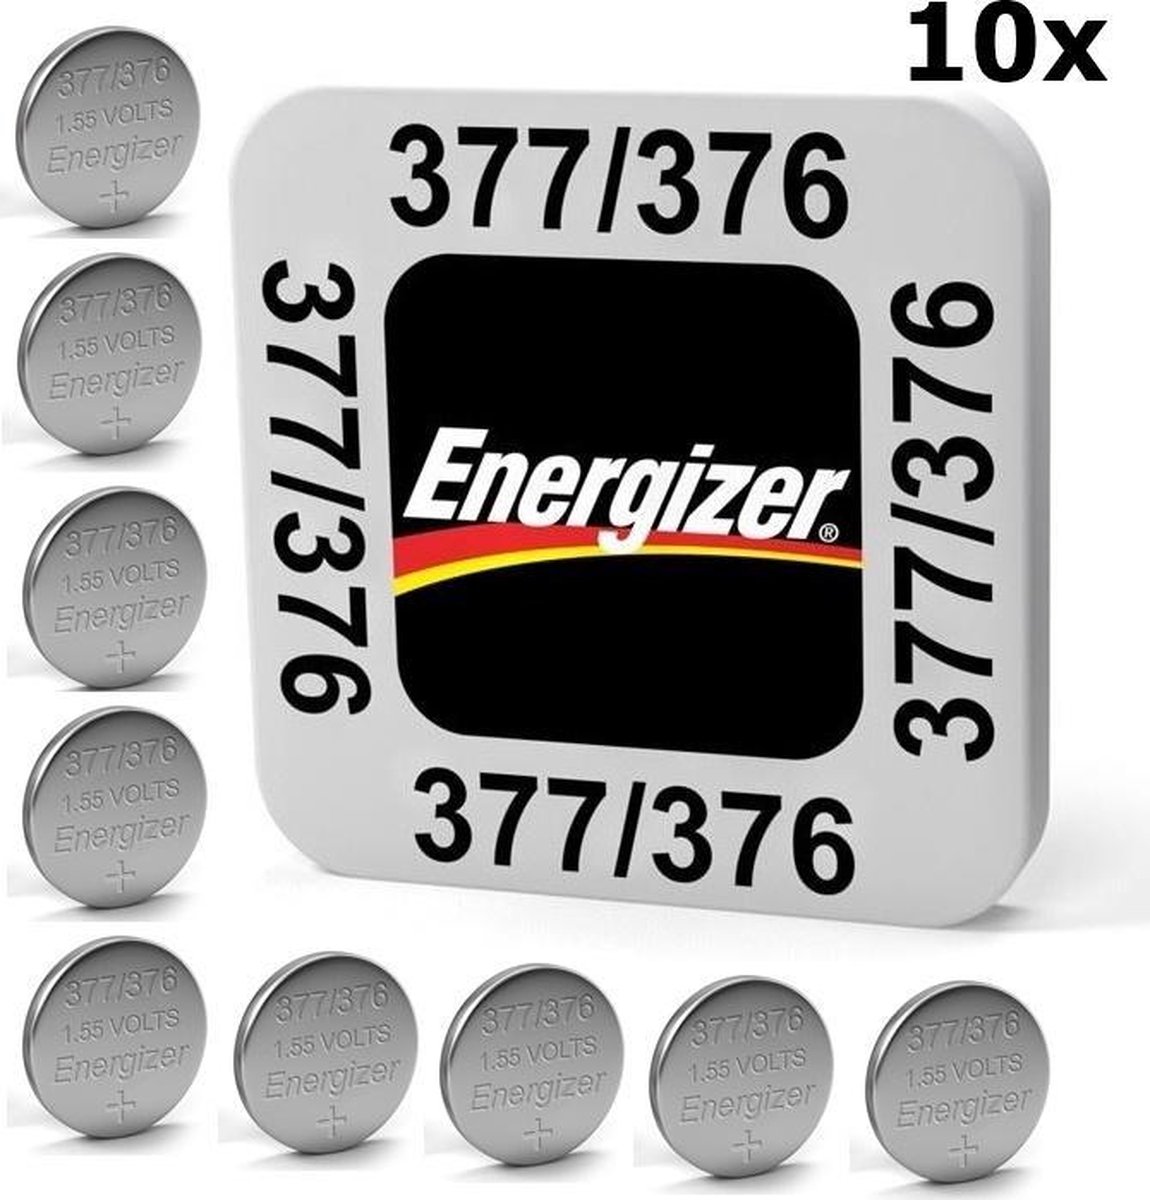 Piles Energizer Pour Montres - 377/376 French